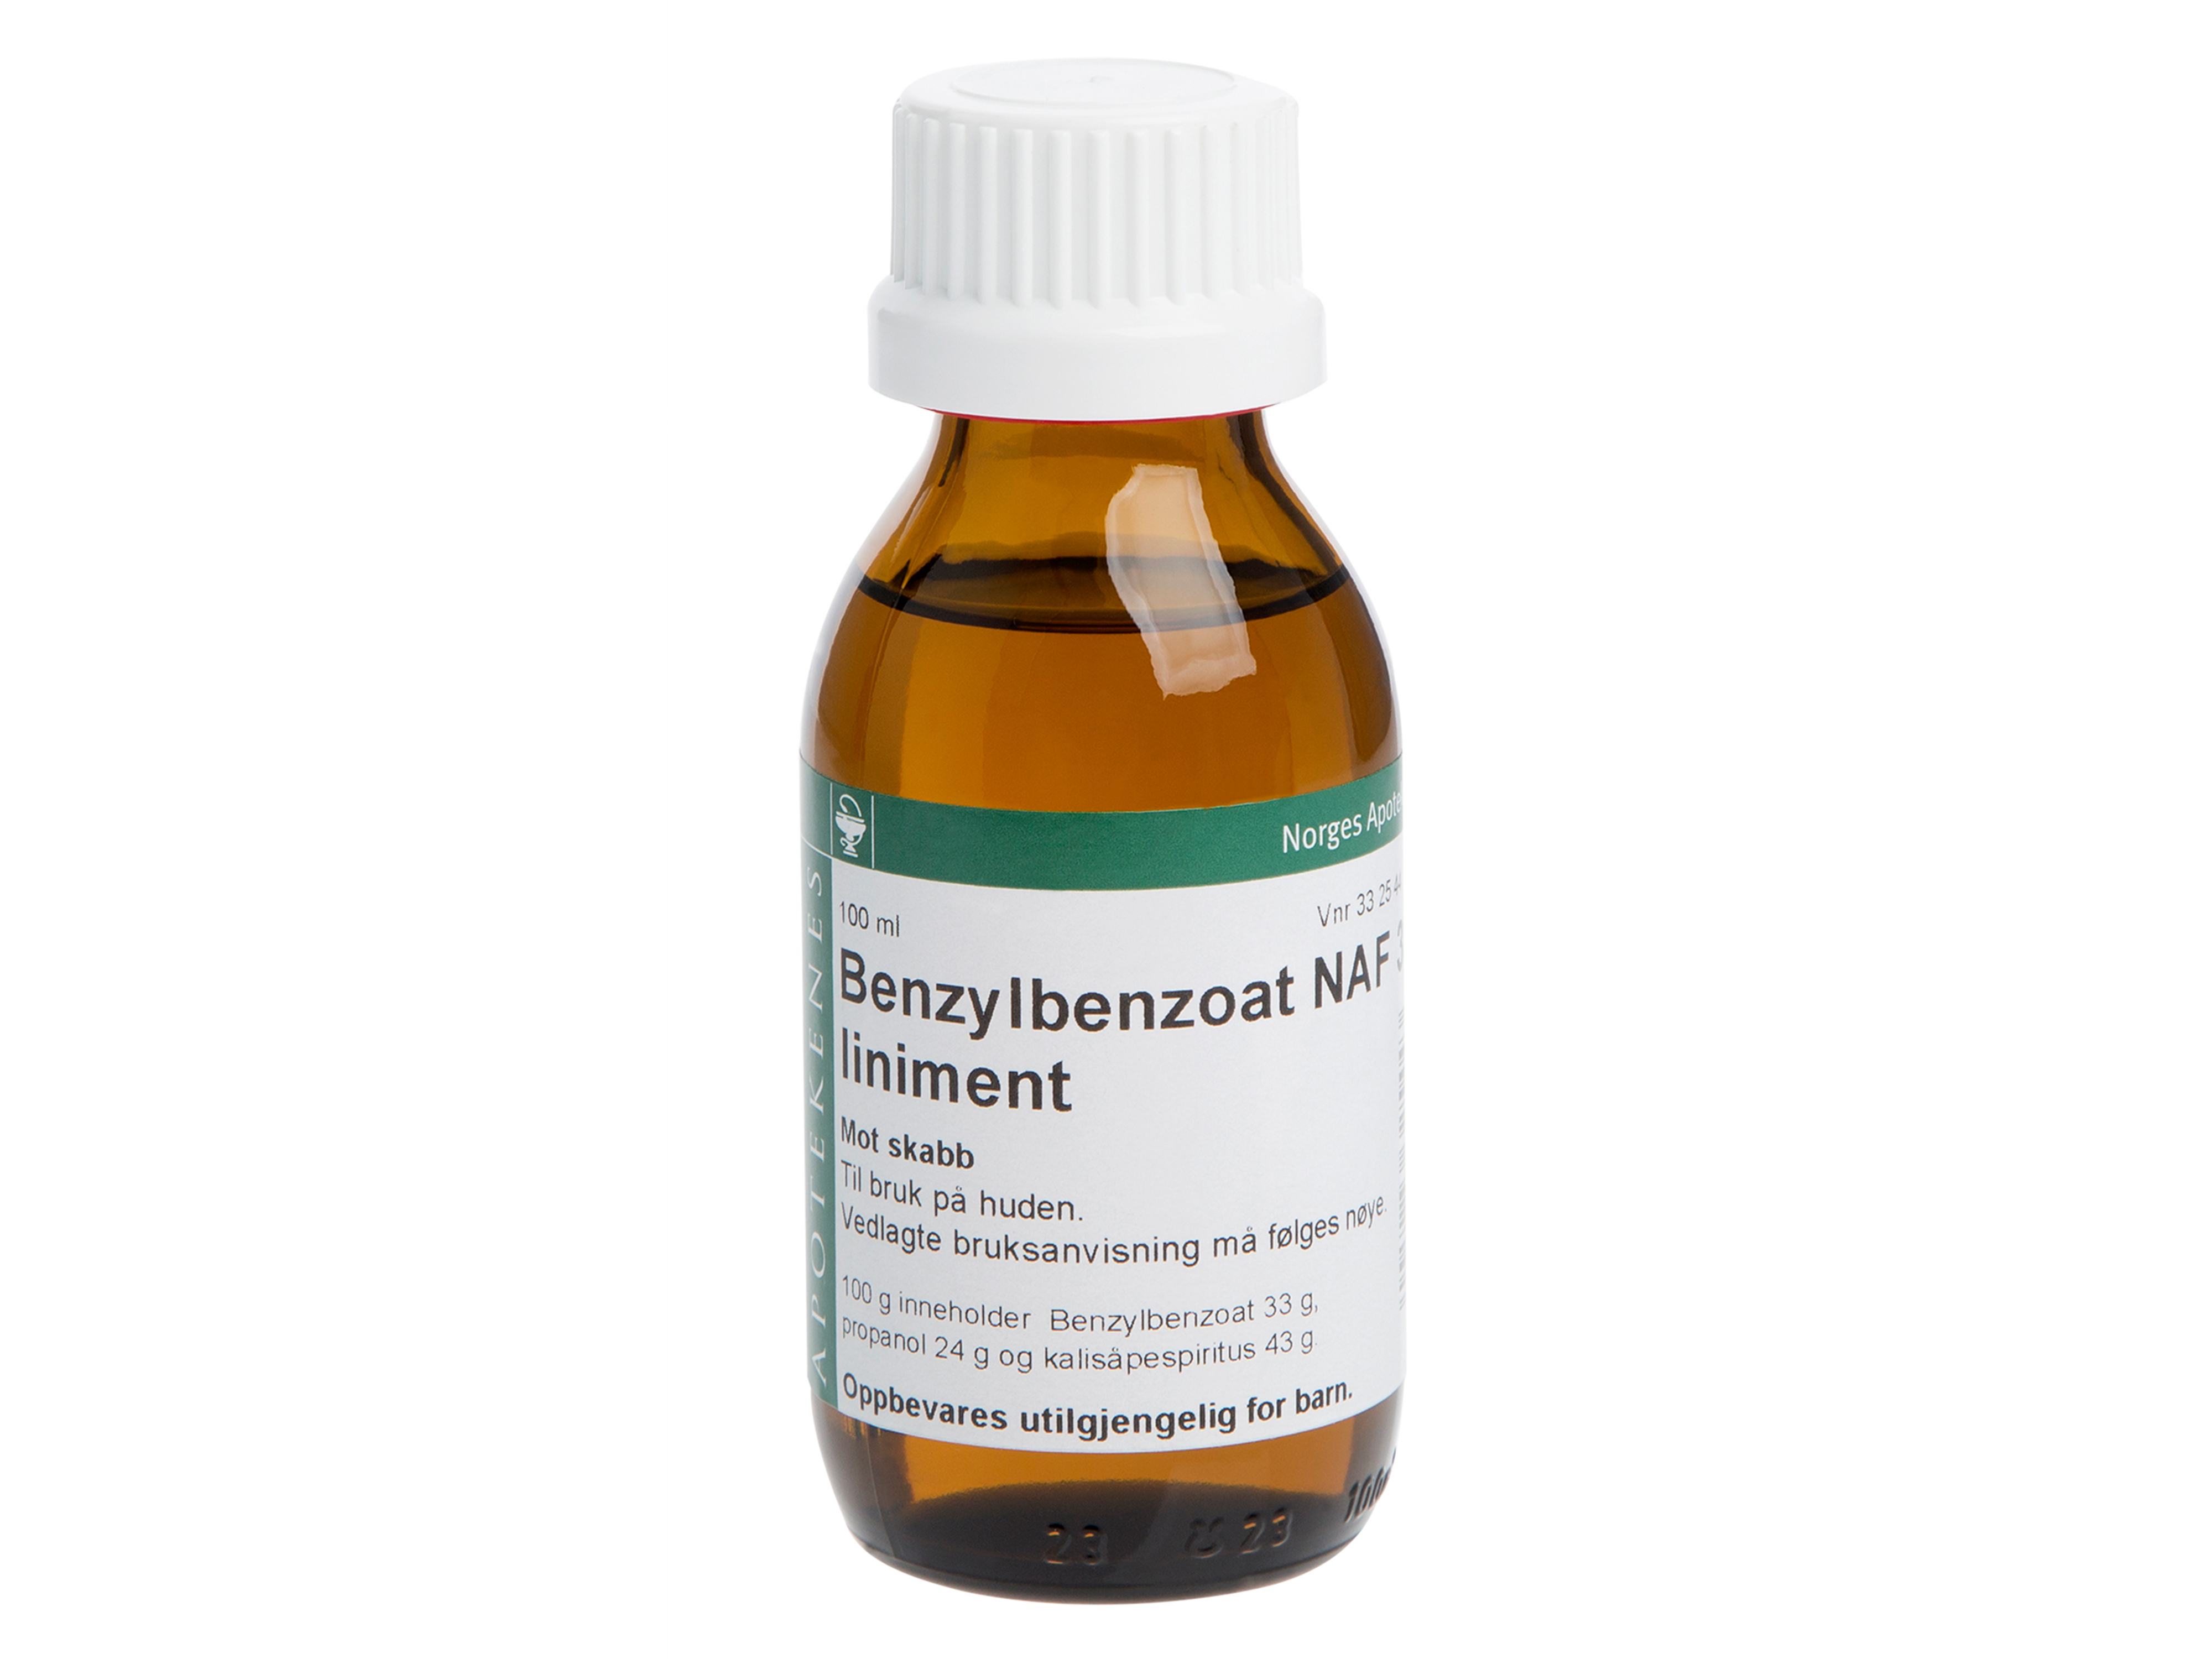 Benzylbenzoat NAF liniment 33%, 100 ml